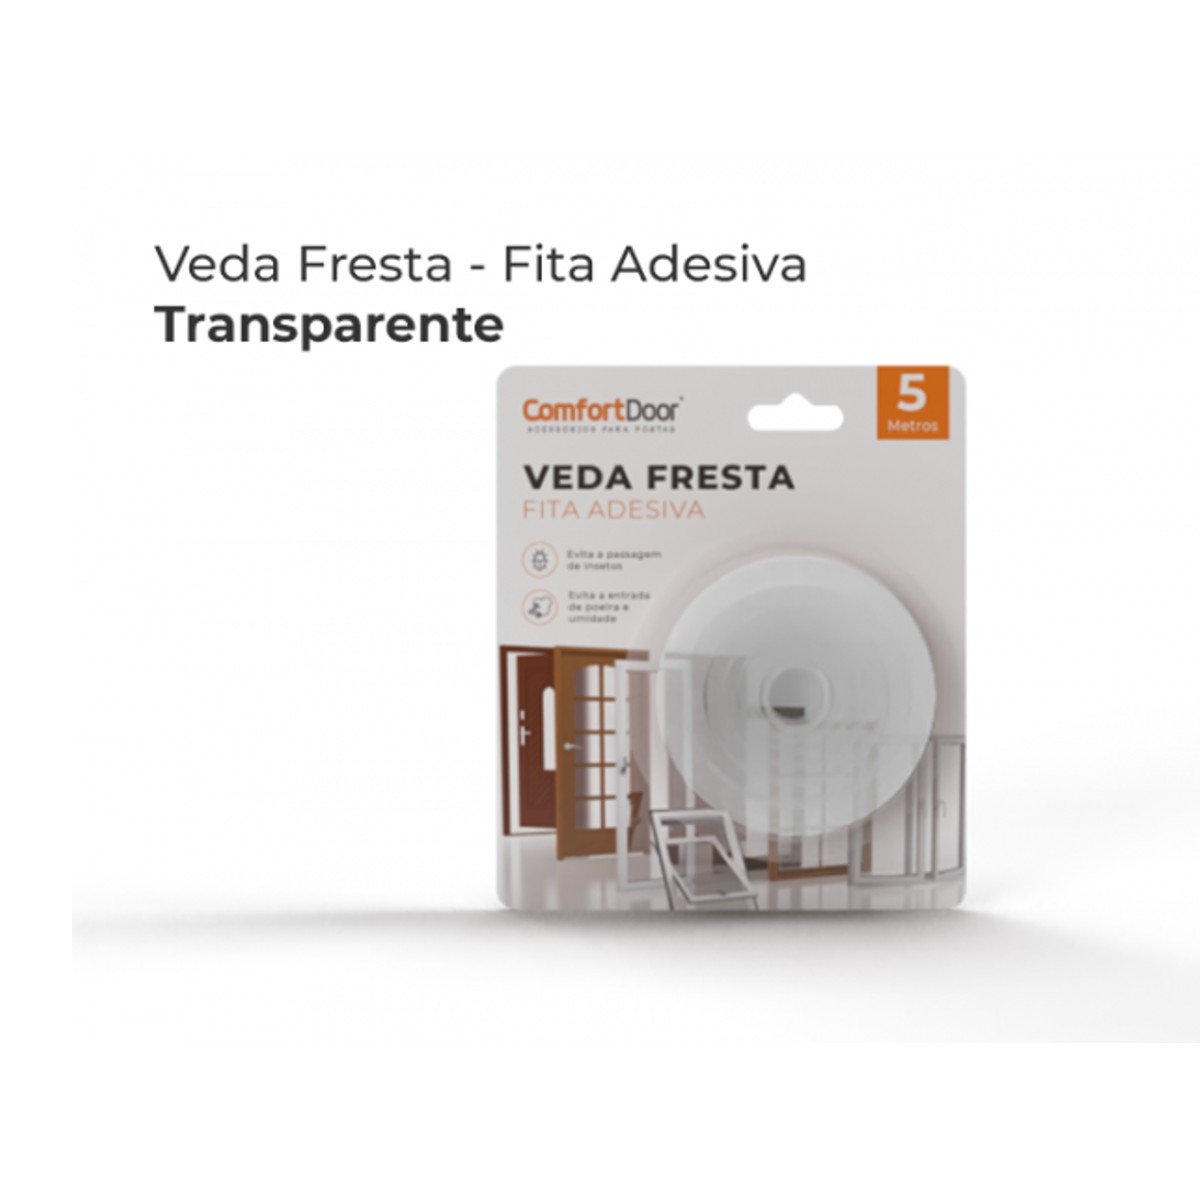 Veda Fresta Fita Adesiva Protetor Porta Janela Vedação Comfort Door 5 Metros Transparente - 9